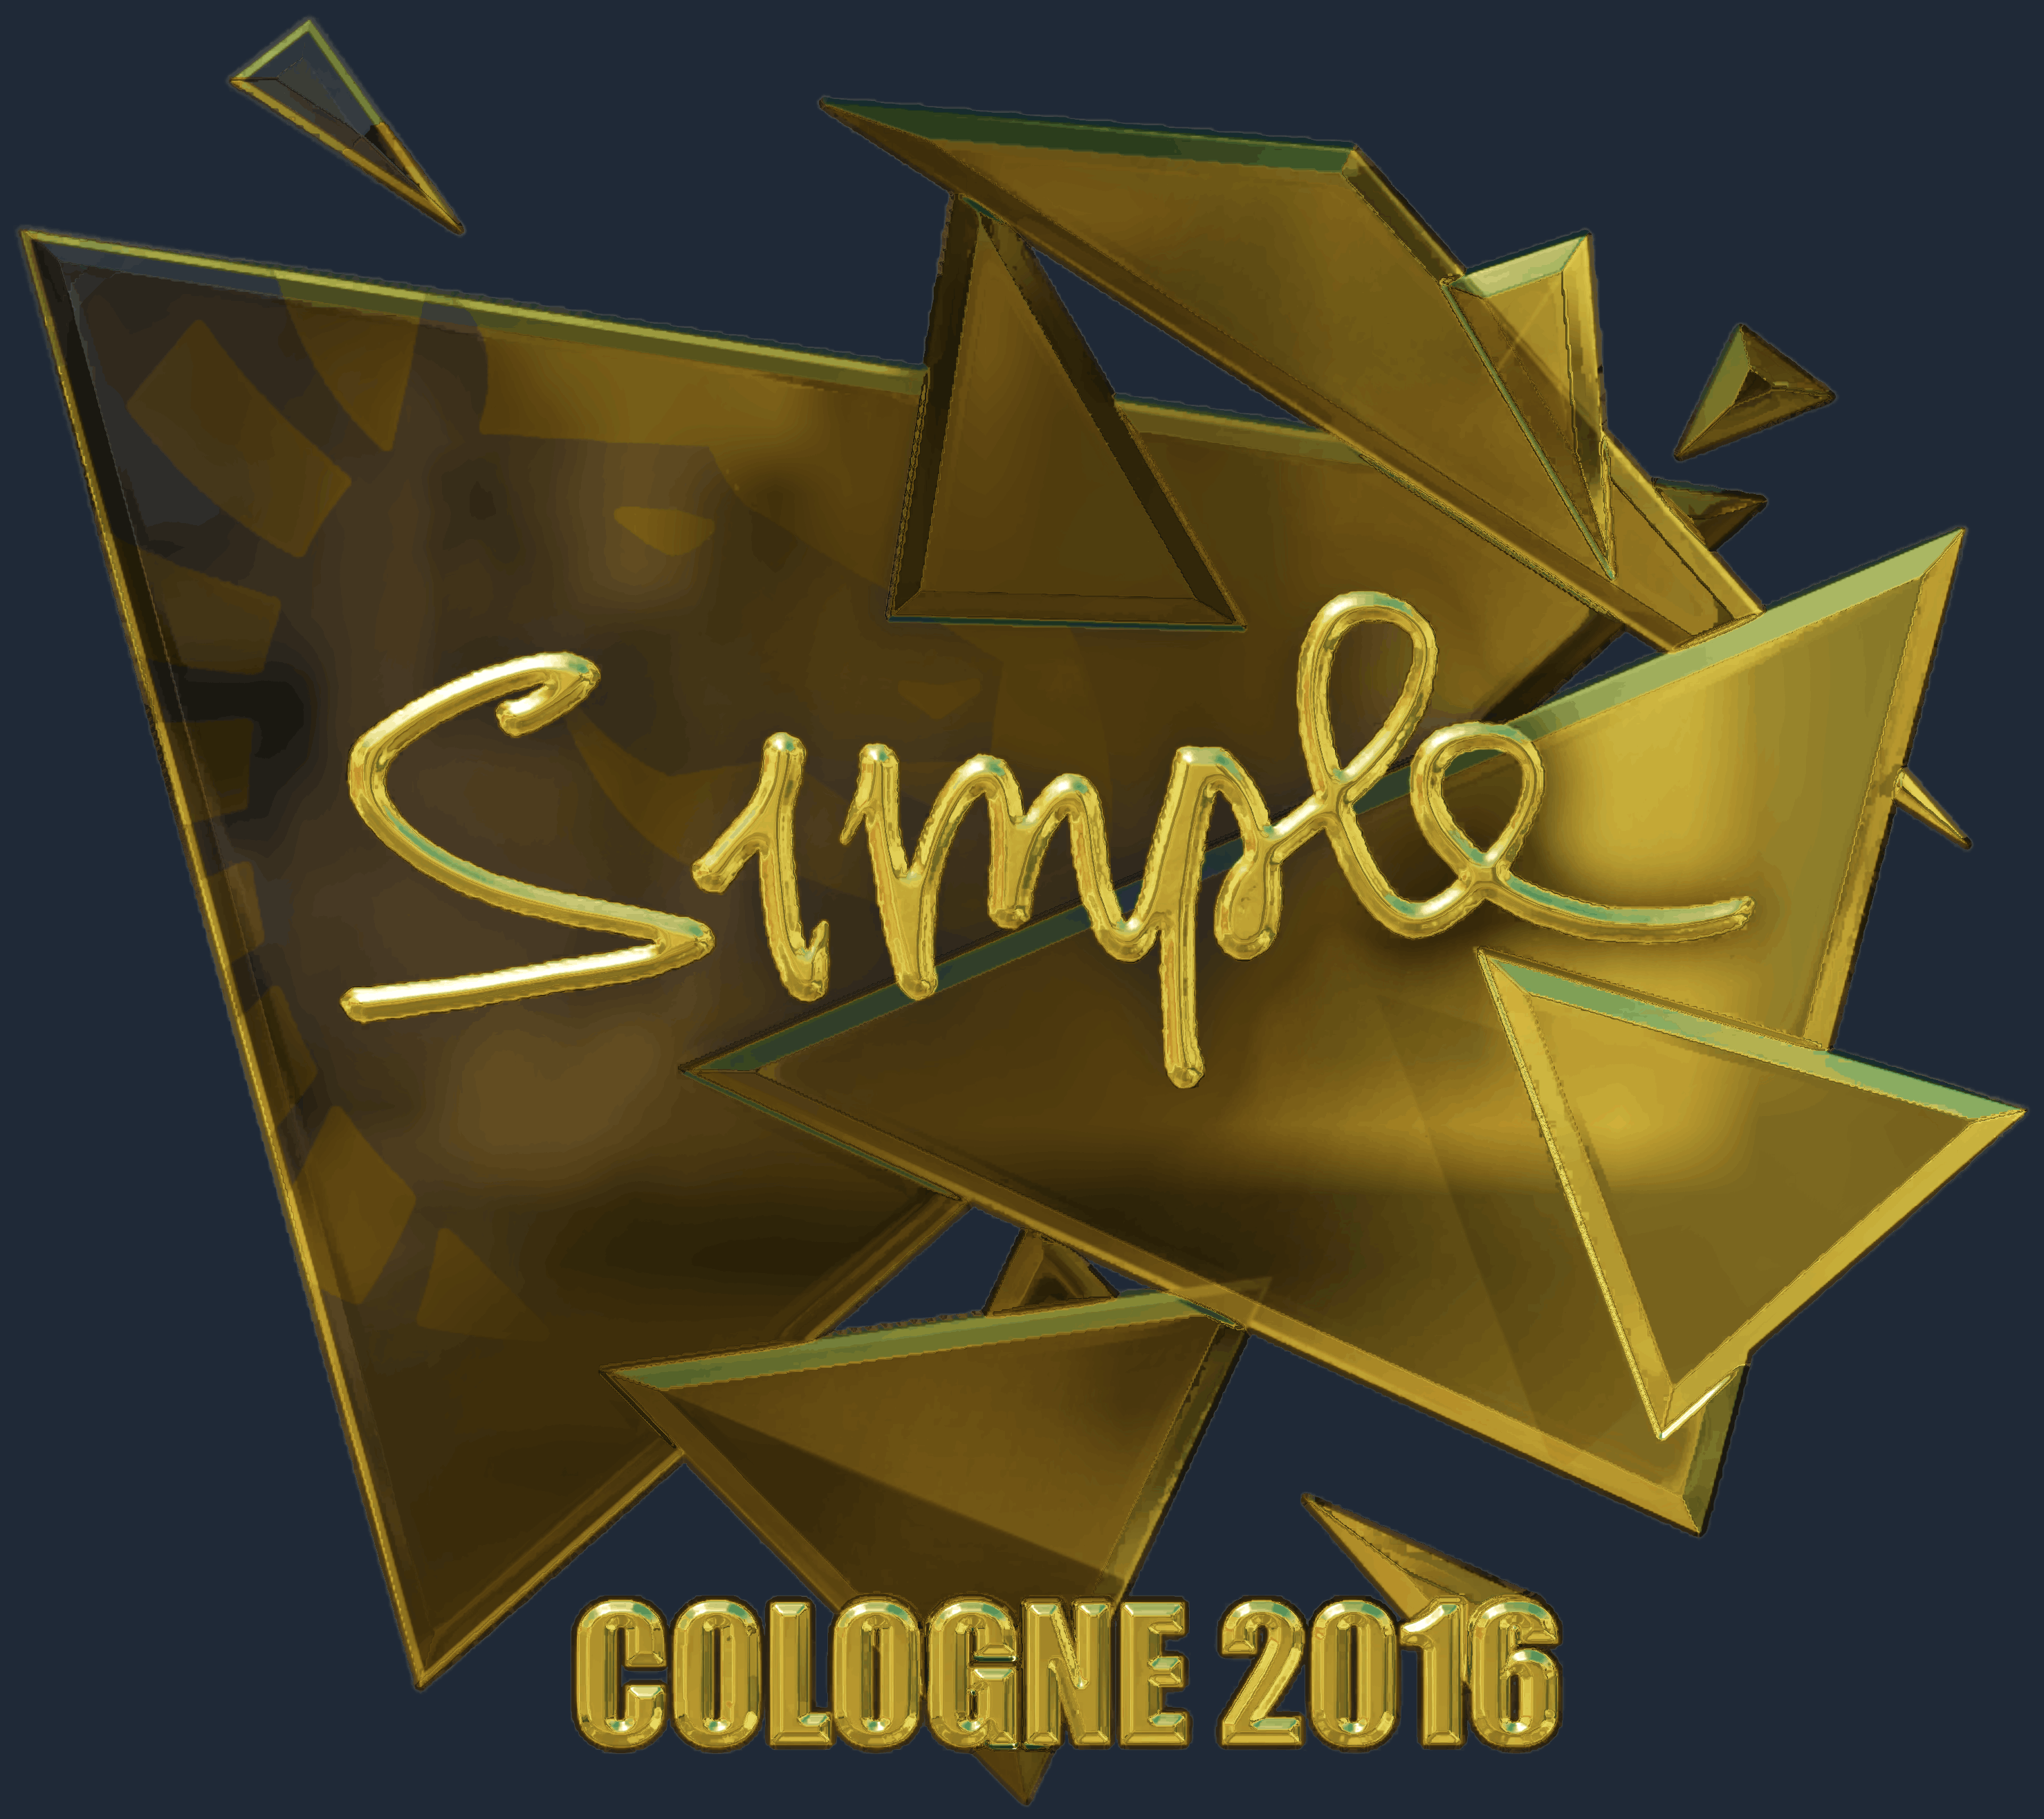 Sticker | s1mple (Gold) | Cologne 2016 Screenshot